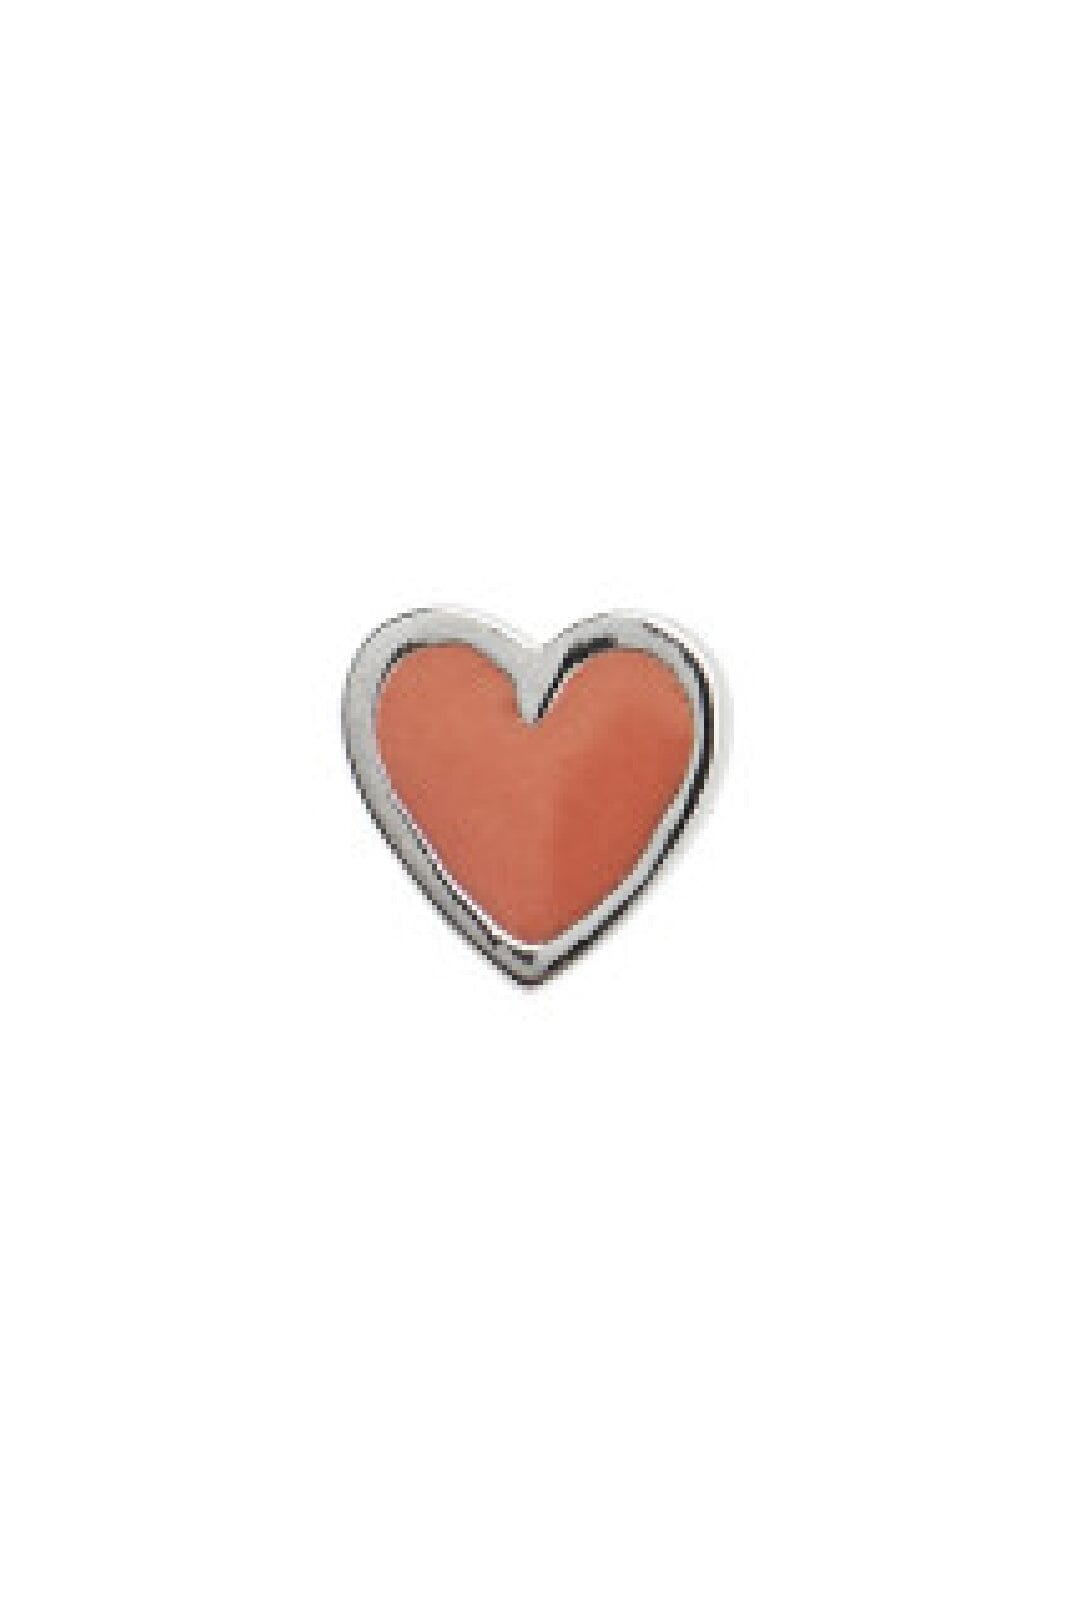 Stine A - Petit Love Heart Coral Enamel Silver - 1181-00-Coral 